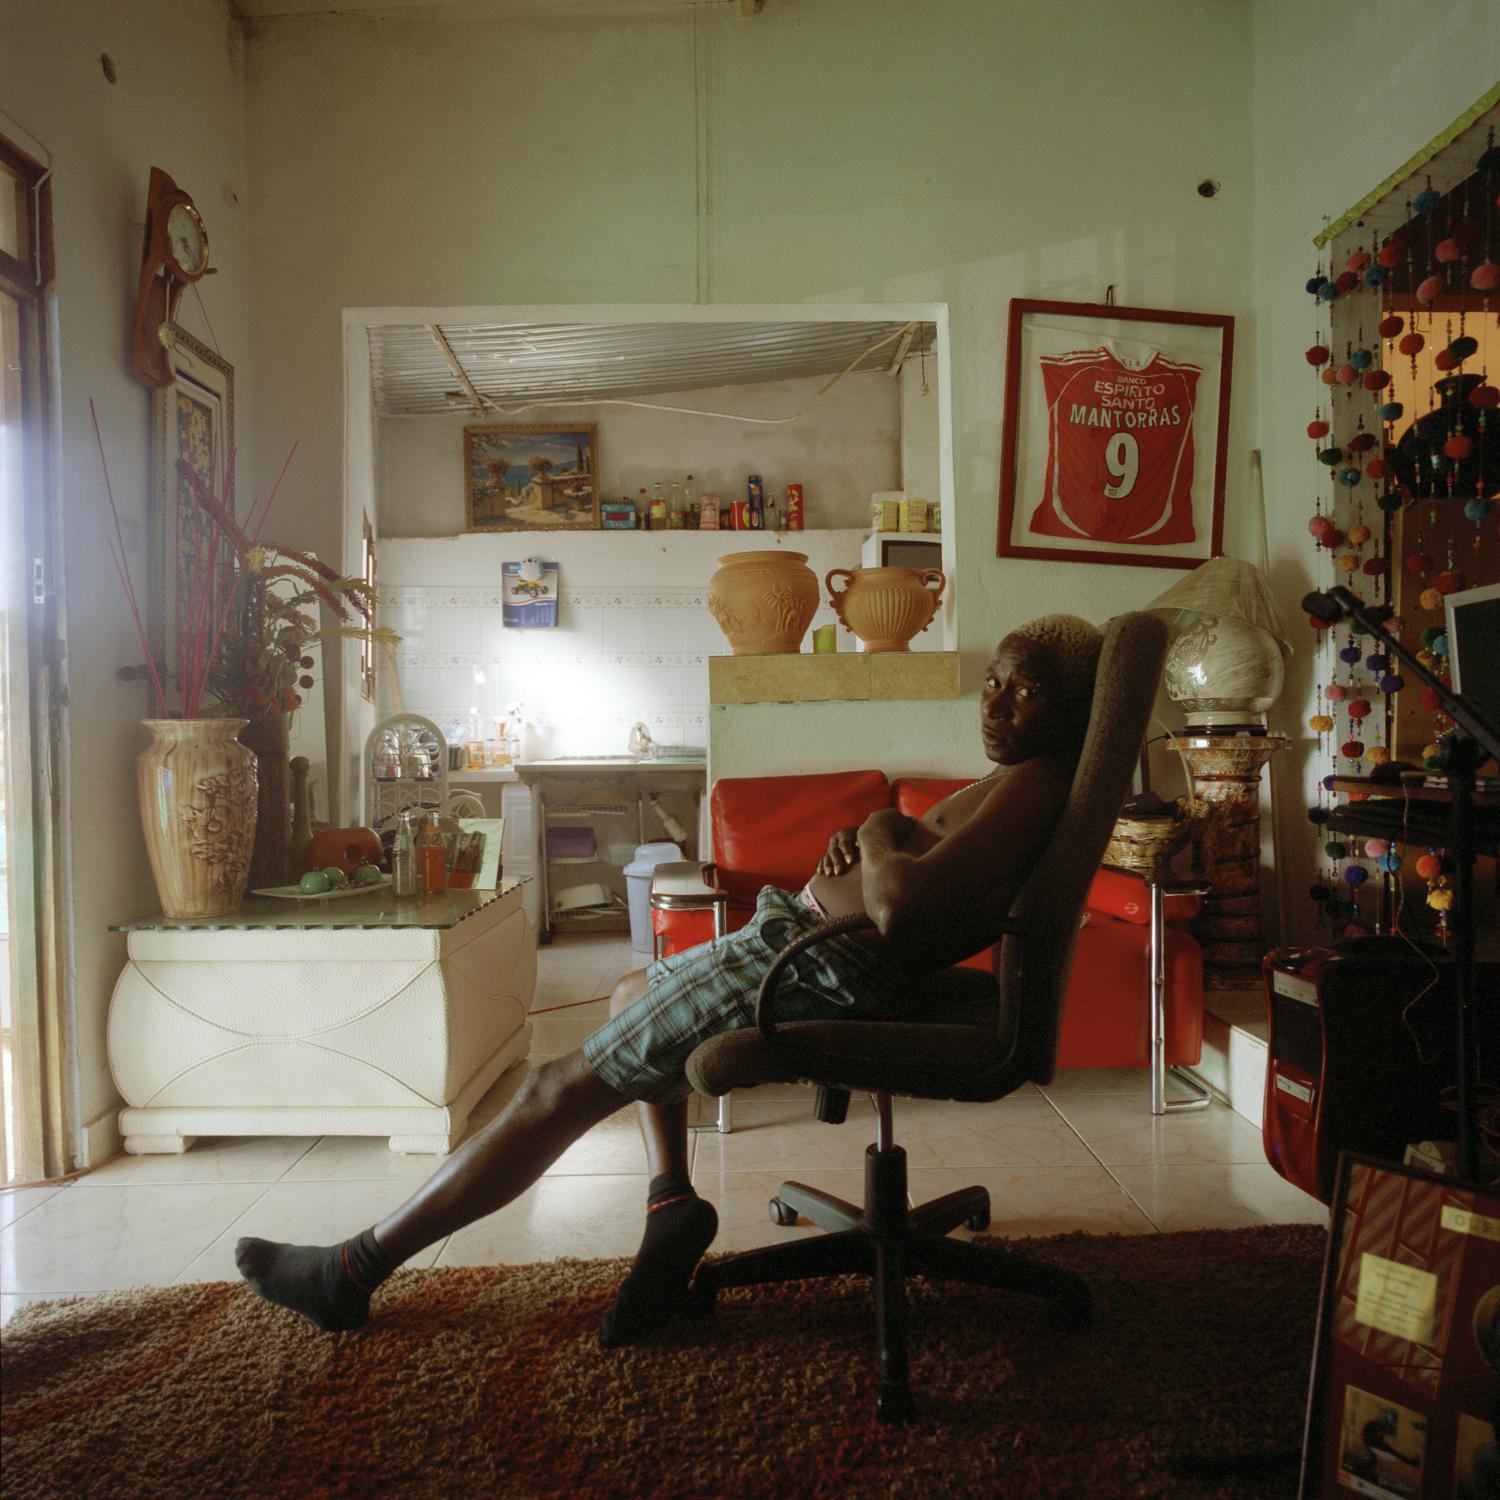 Angola - Kuduro star Sebem at his home in Luanda, the capital of...